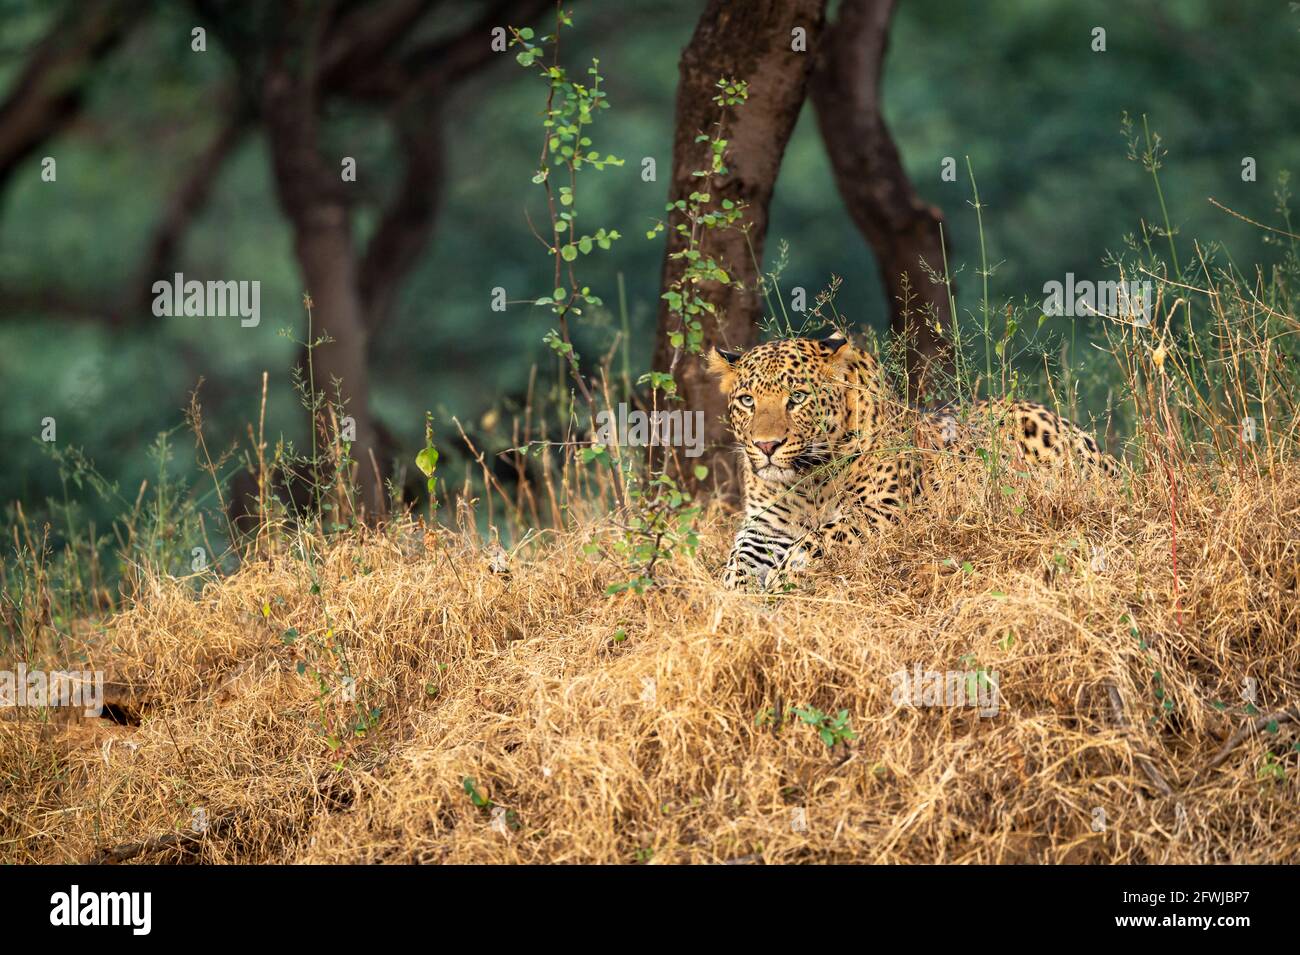 Ritratto di leopardo maschile selvatico o pantera nella riserva forestale jhalana jaipur rajasthan india - panthera pardus fusca Foto Stock